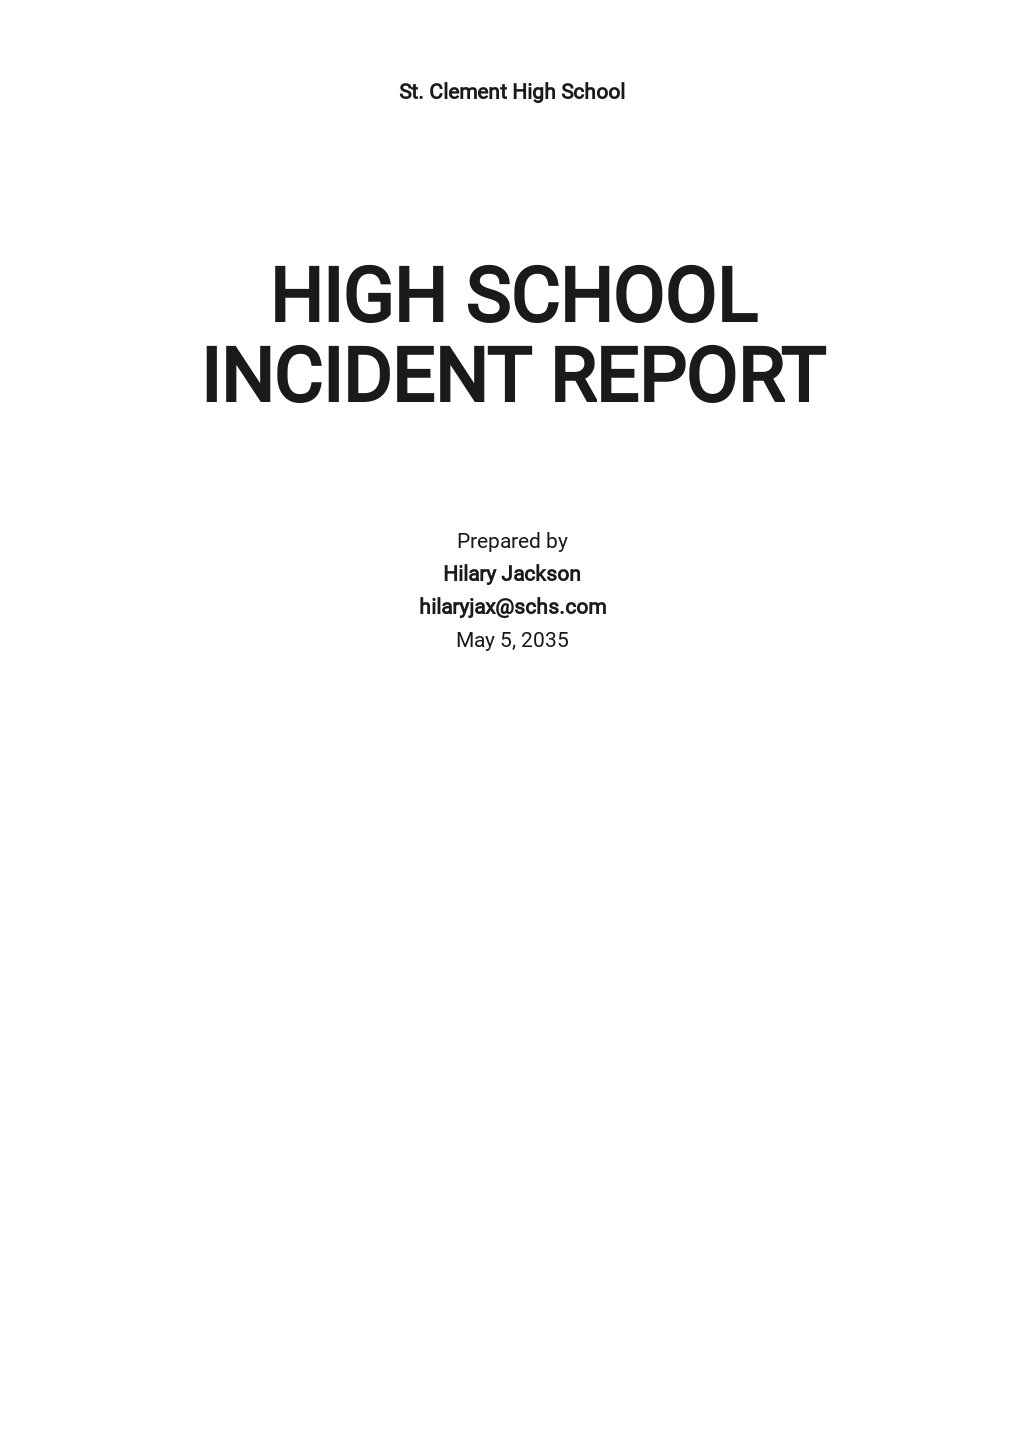 High School Incident Report Template.jpe